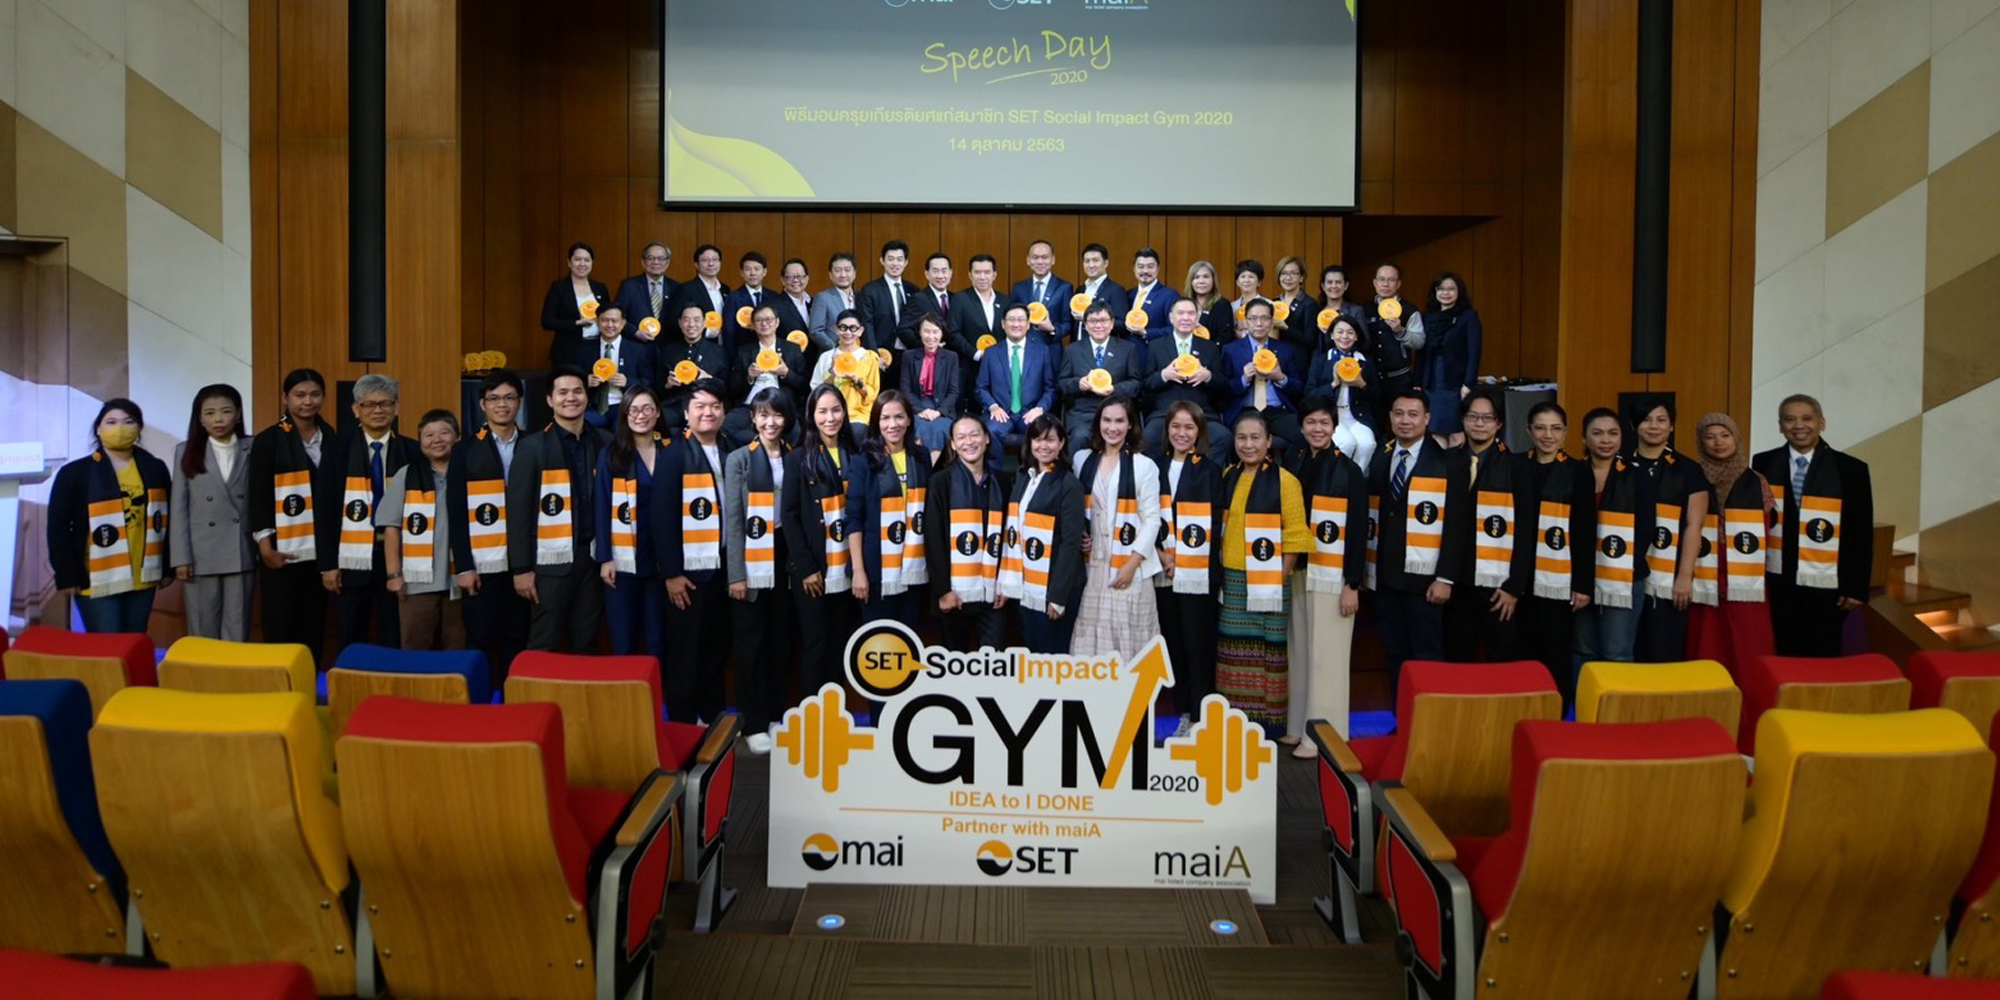 SET Social Impact Gym 2020 : Speech Day เวที 13 SE นำเสนอแผนธุรกิจ